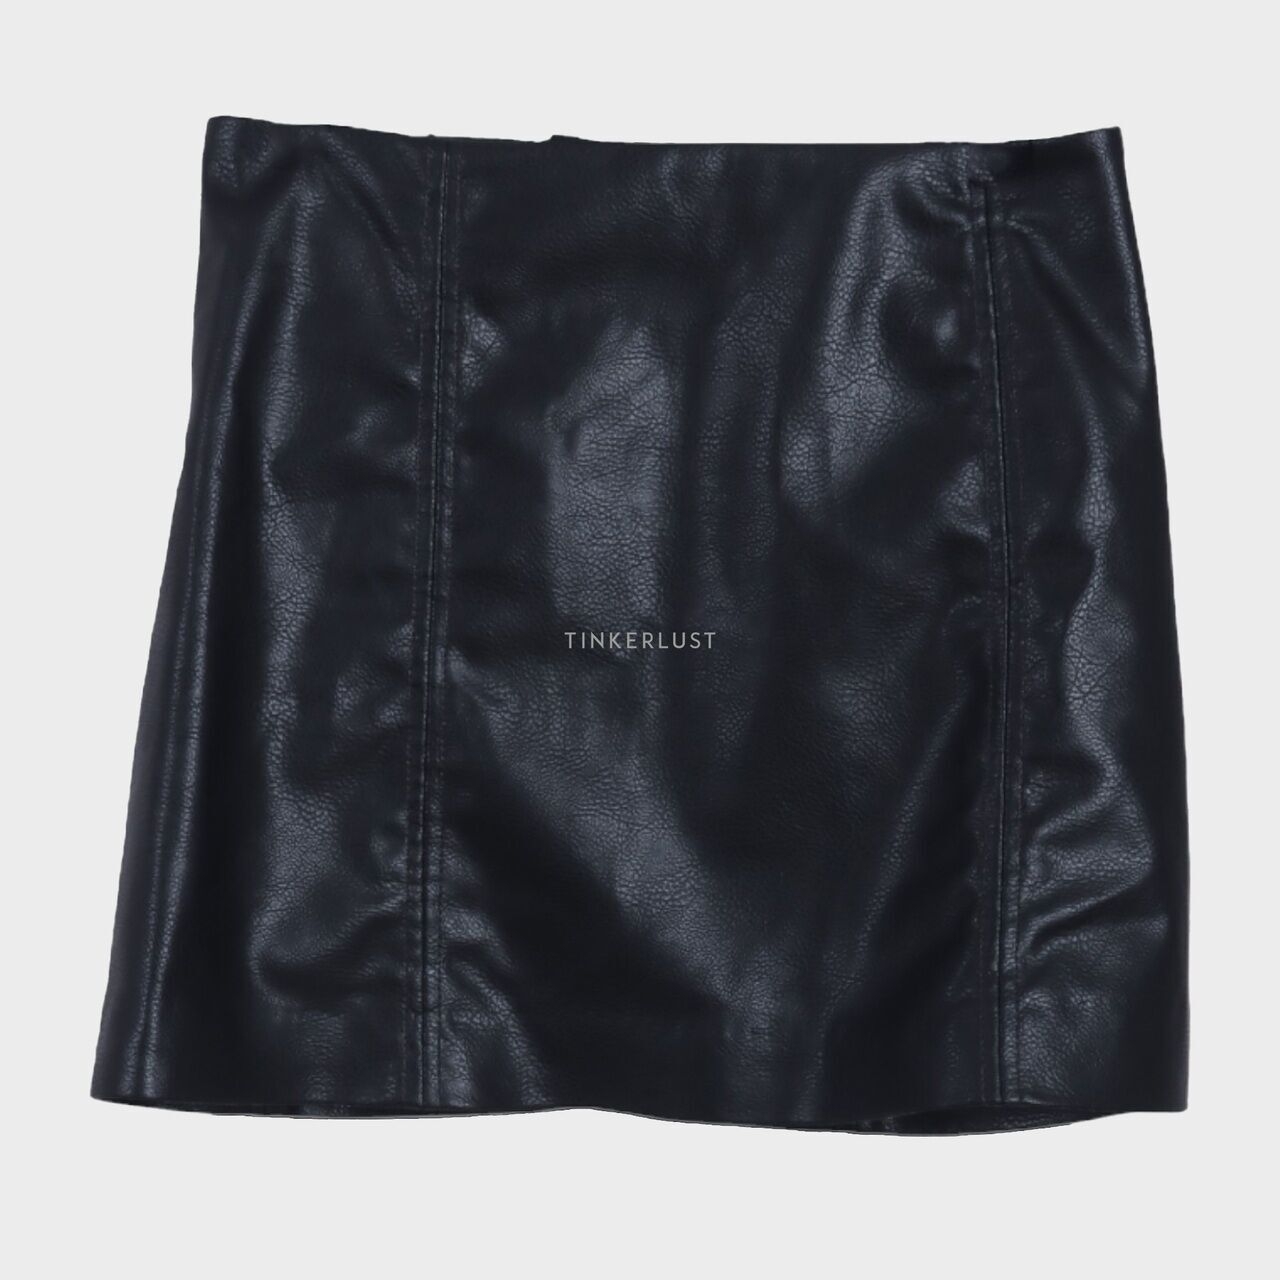 H&M Black Leather Mini Skirt